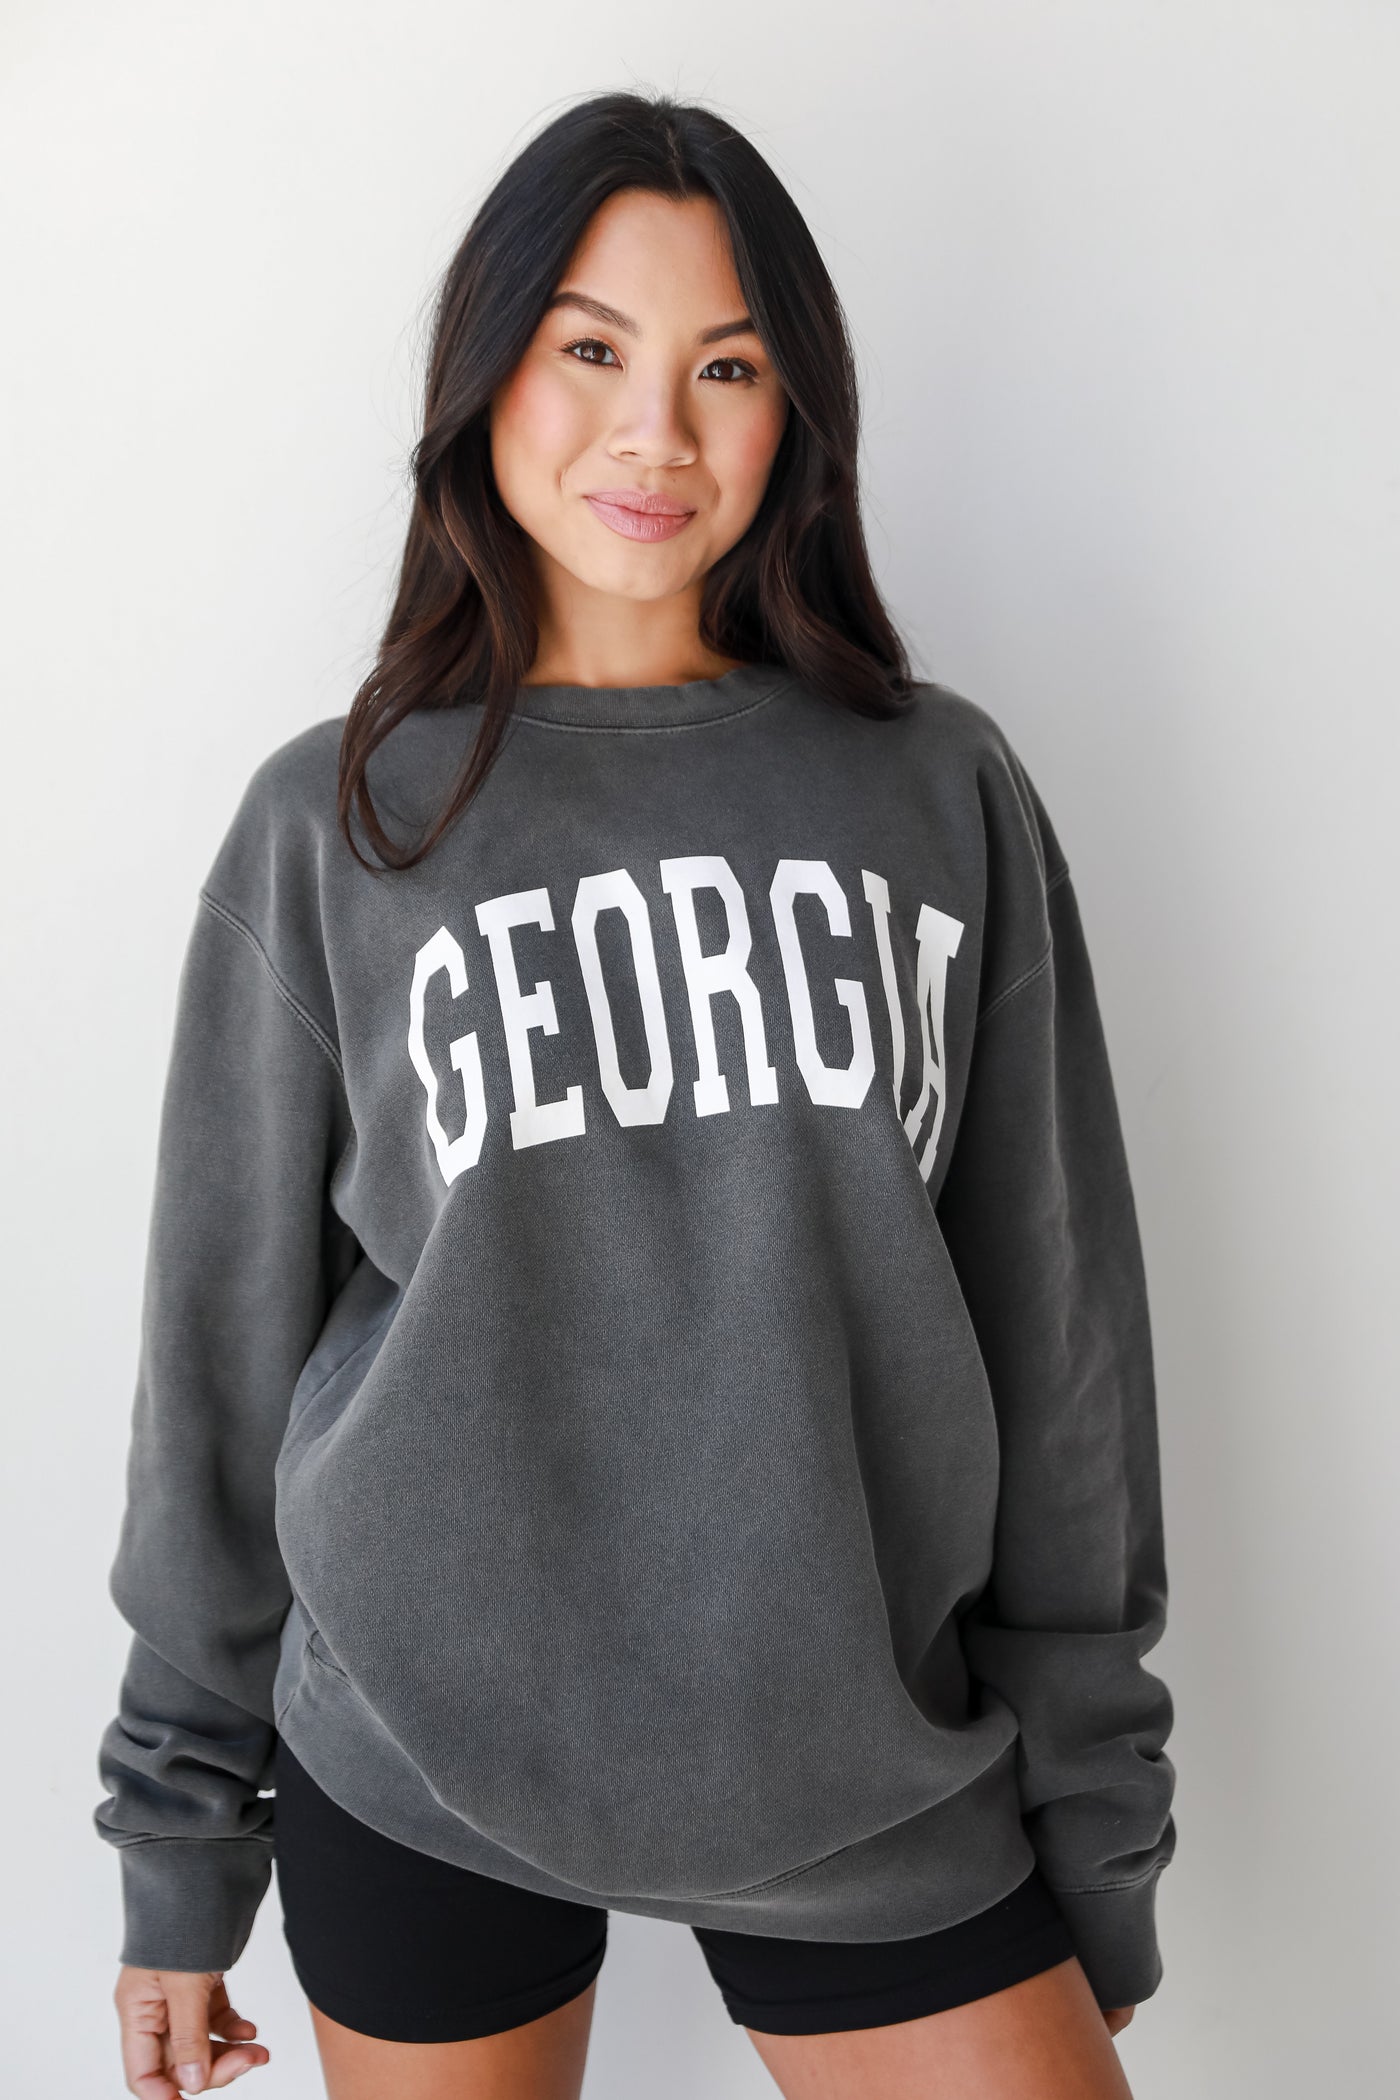 Charcoal Georgia Pullover. UGA Gameday Shirt. Oversized Sweatshirt. Cute Gameday Outfits 